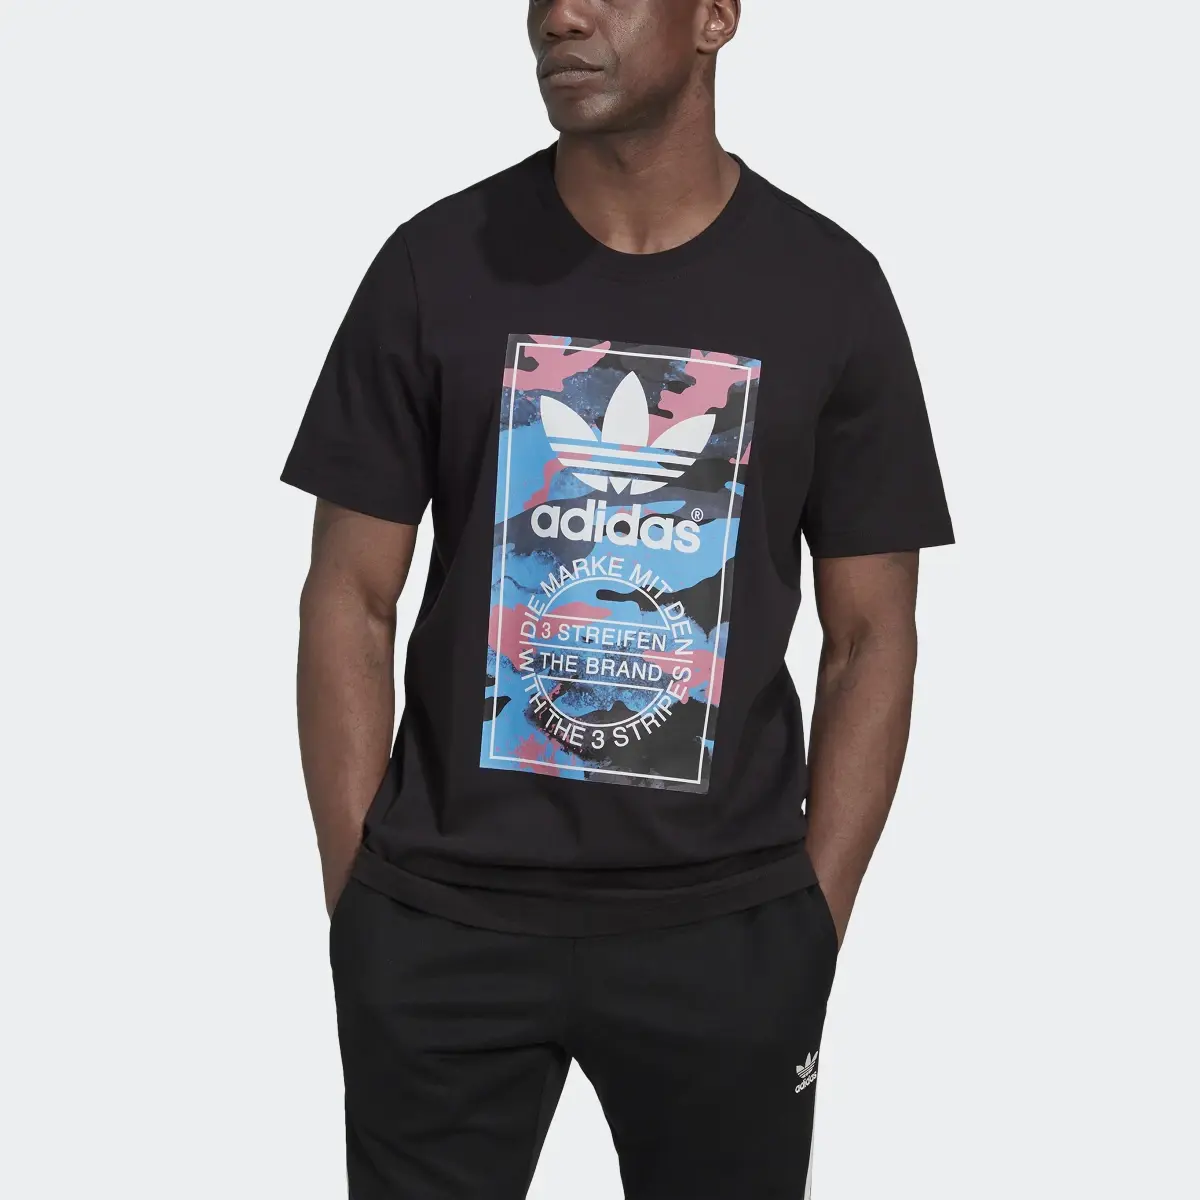 Adidas T-shirt. 1